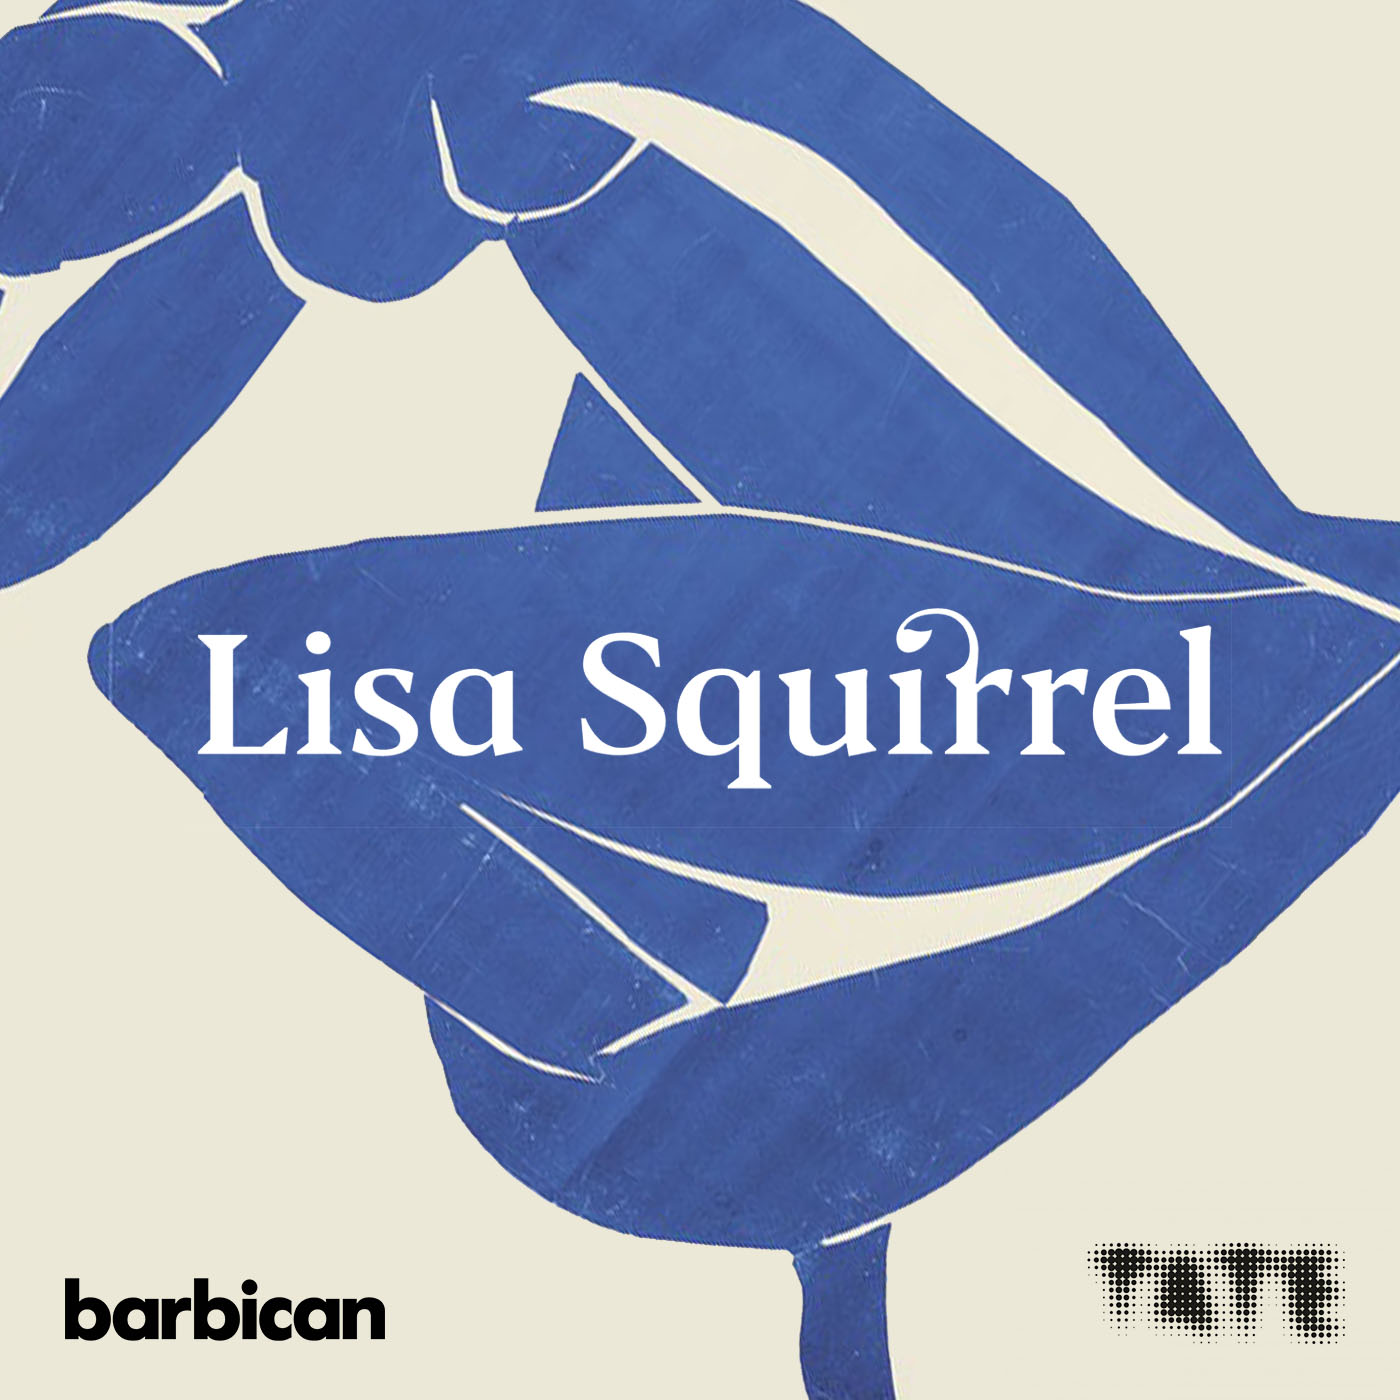 Lisa Squirrel website